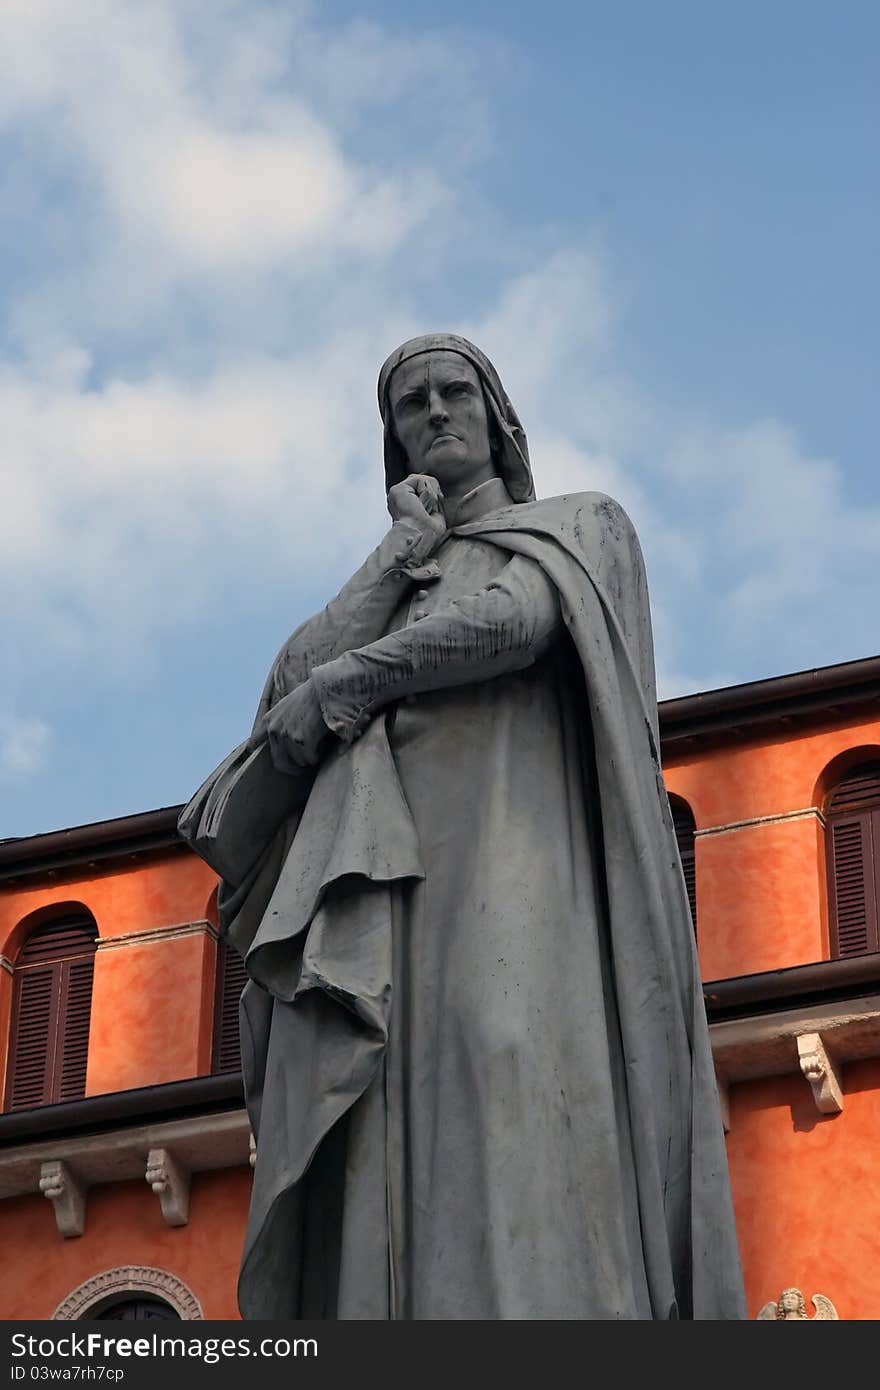 Statue of Dante Alighieri. Dante Alighieri statue in Verona, Italy. Statue of Dante Alighieri. Dante Alighieri statue in Verona, Italy.